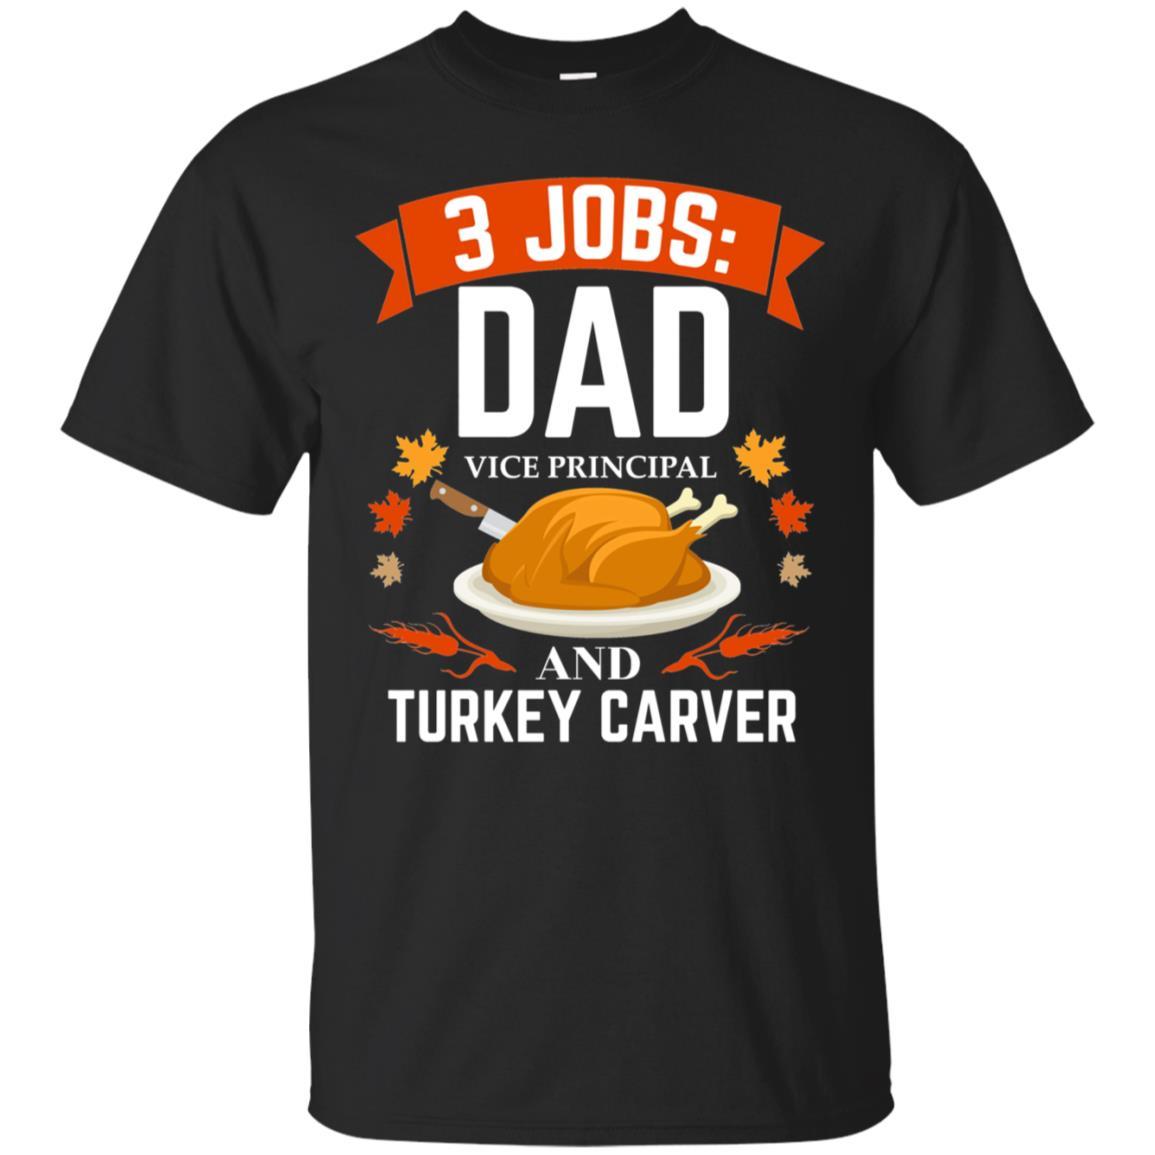 Buy Dad Vice Principal Turkey Carver Tee Thanksgiving Christmas Shirts